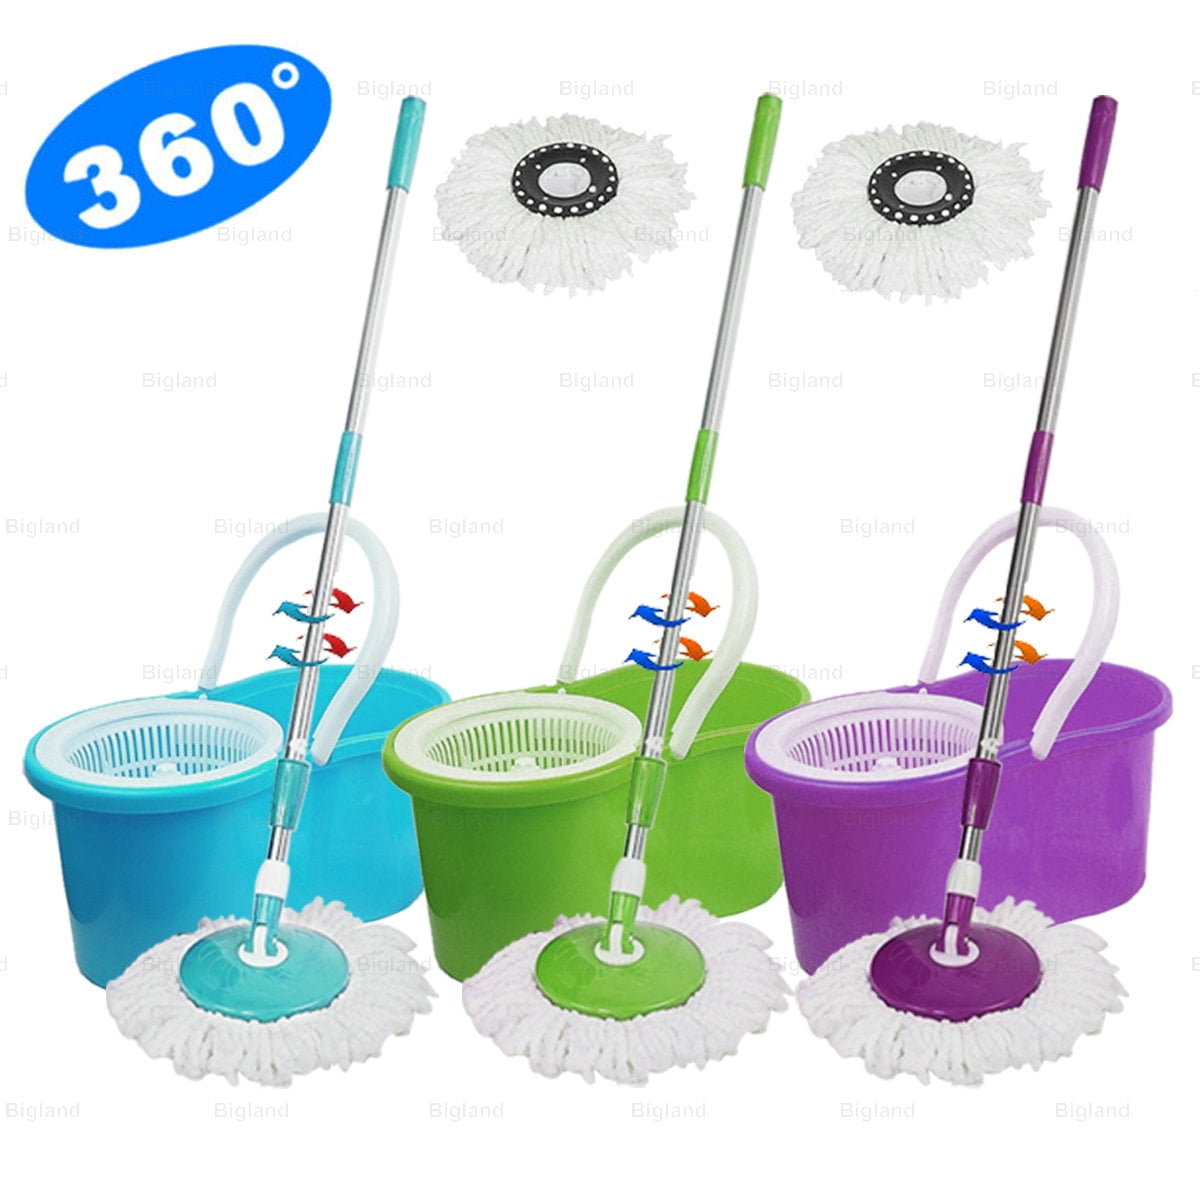 Hot 360°Easy Clean Floor Mop Bucket 2 Heads Microfiber Spin Rotating Head Green 